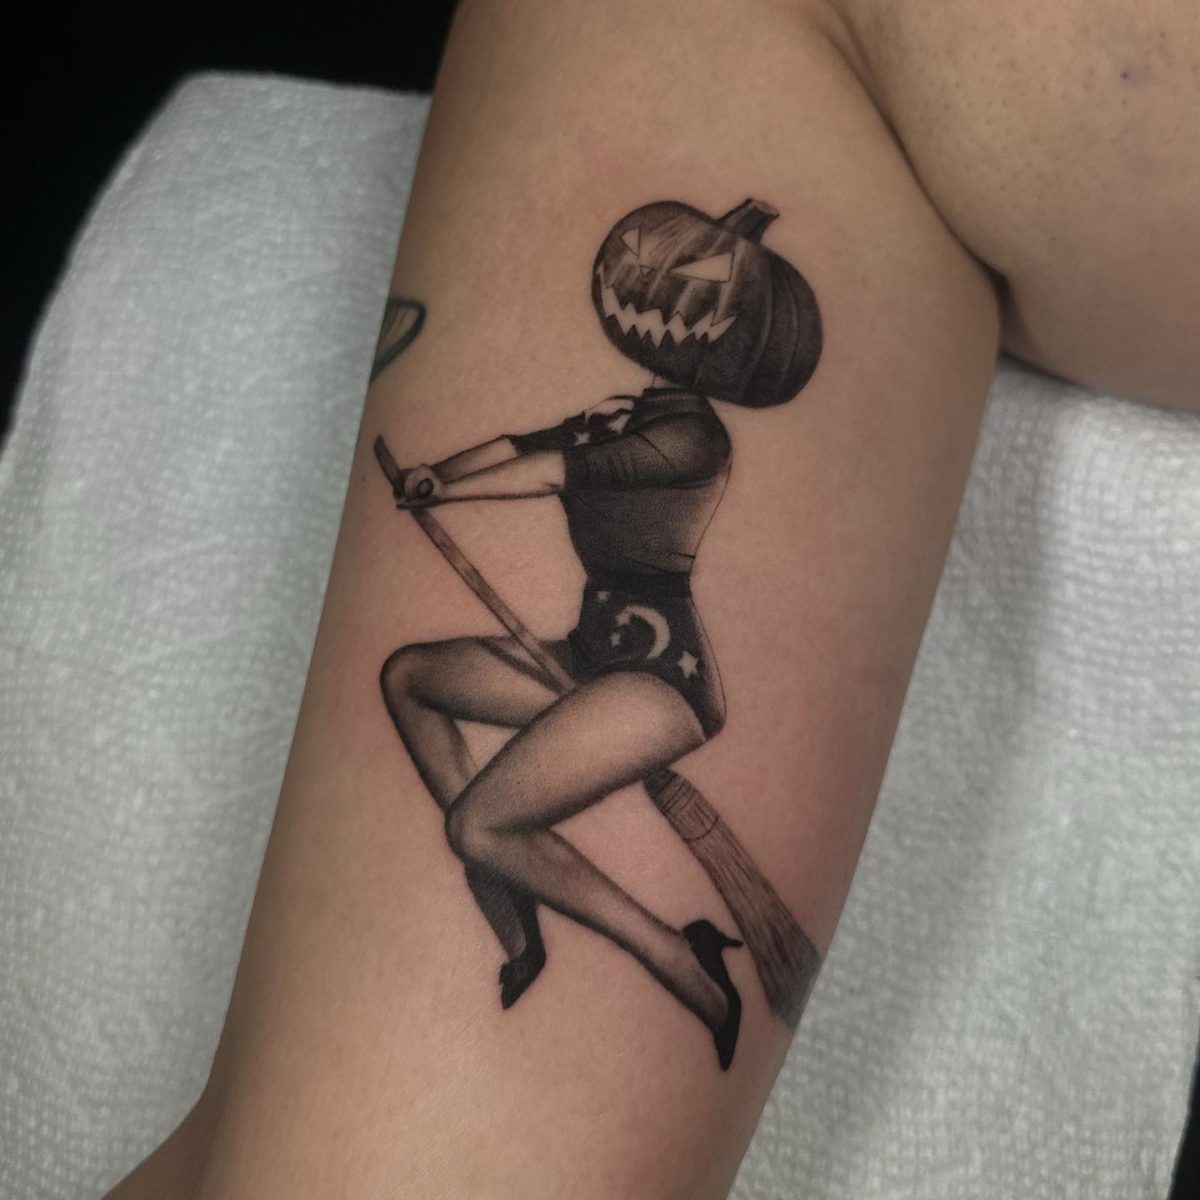 Spooky Season tattoos 